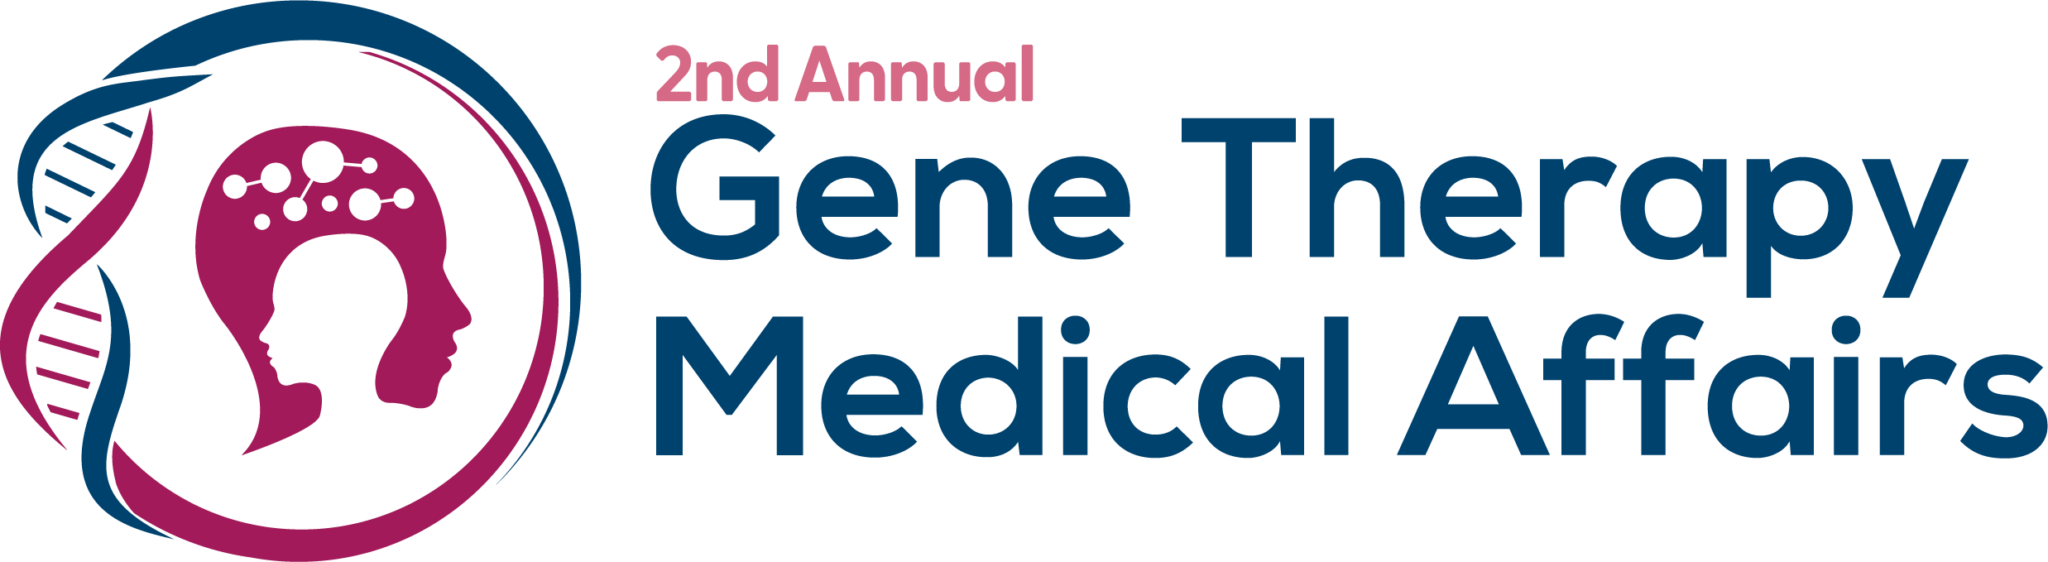 26974-Gene-Therapy-Medical-Affairs-Summit-2022-logo-002-2048x562